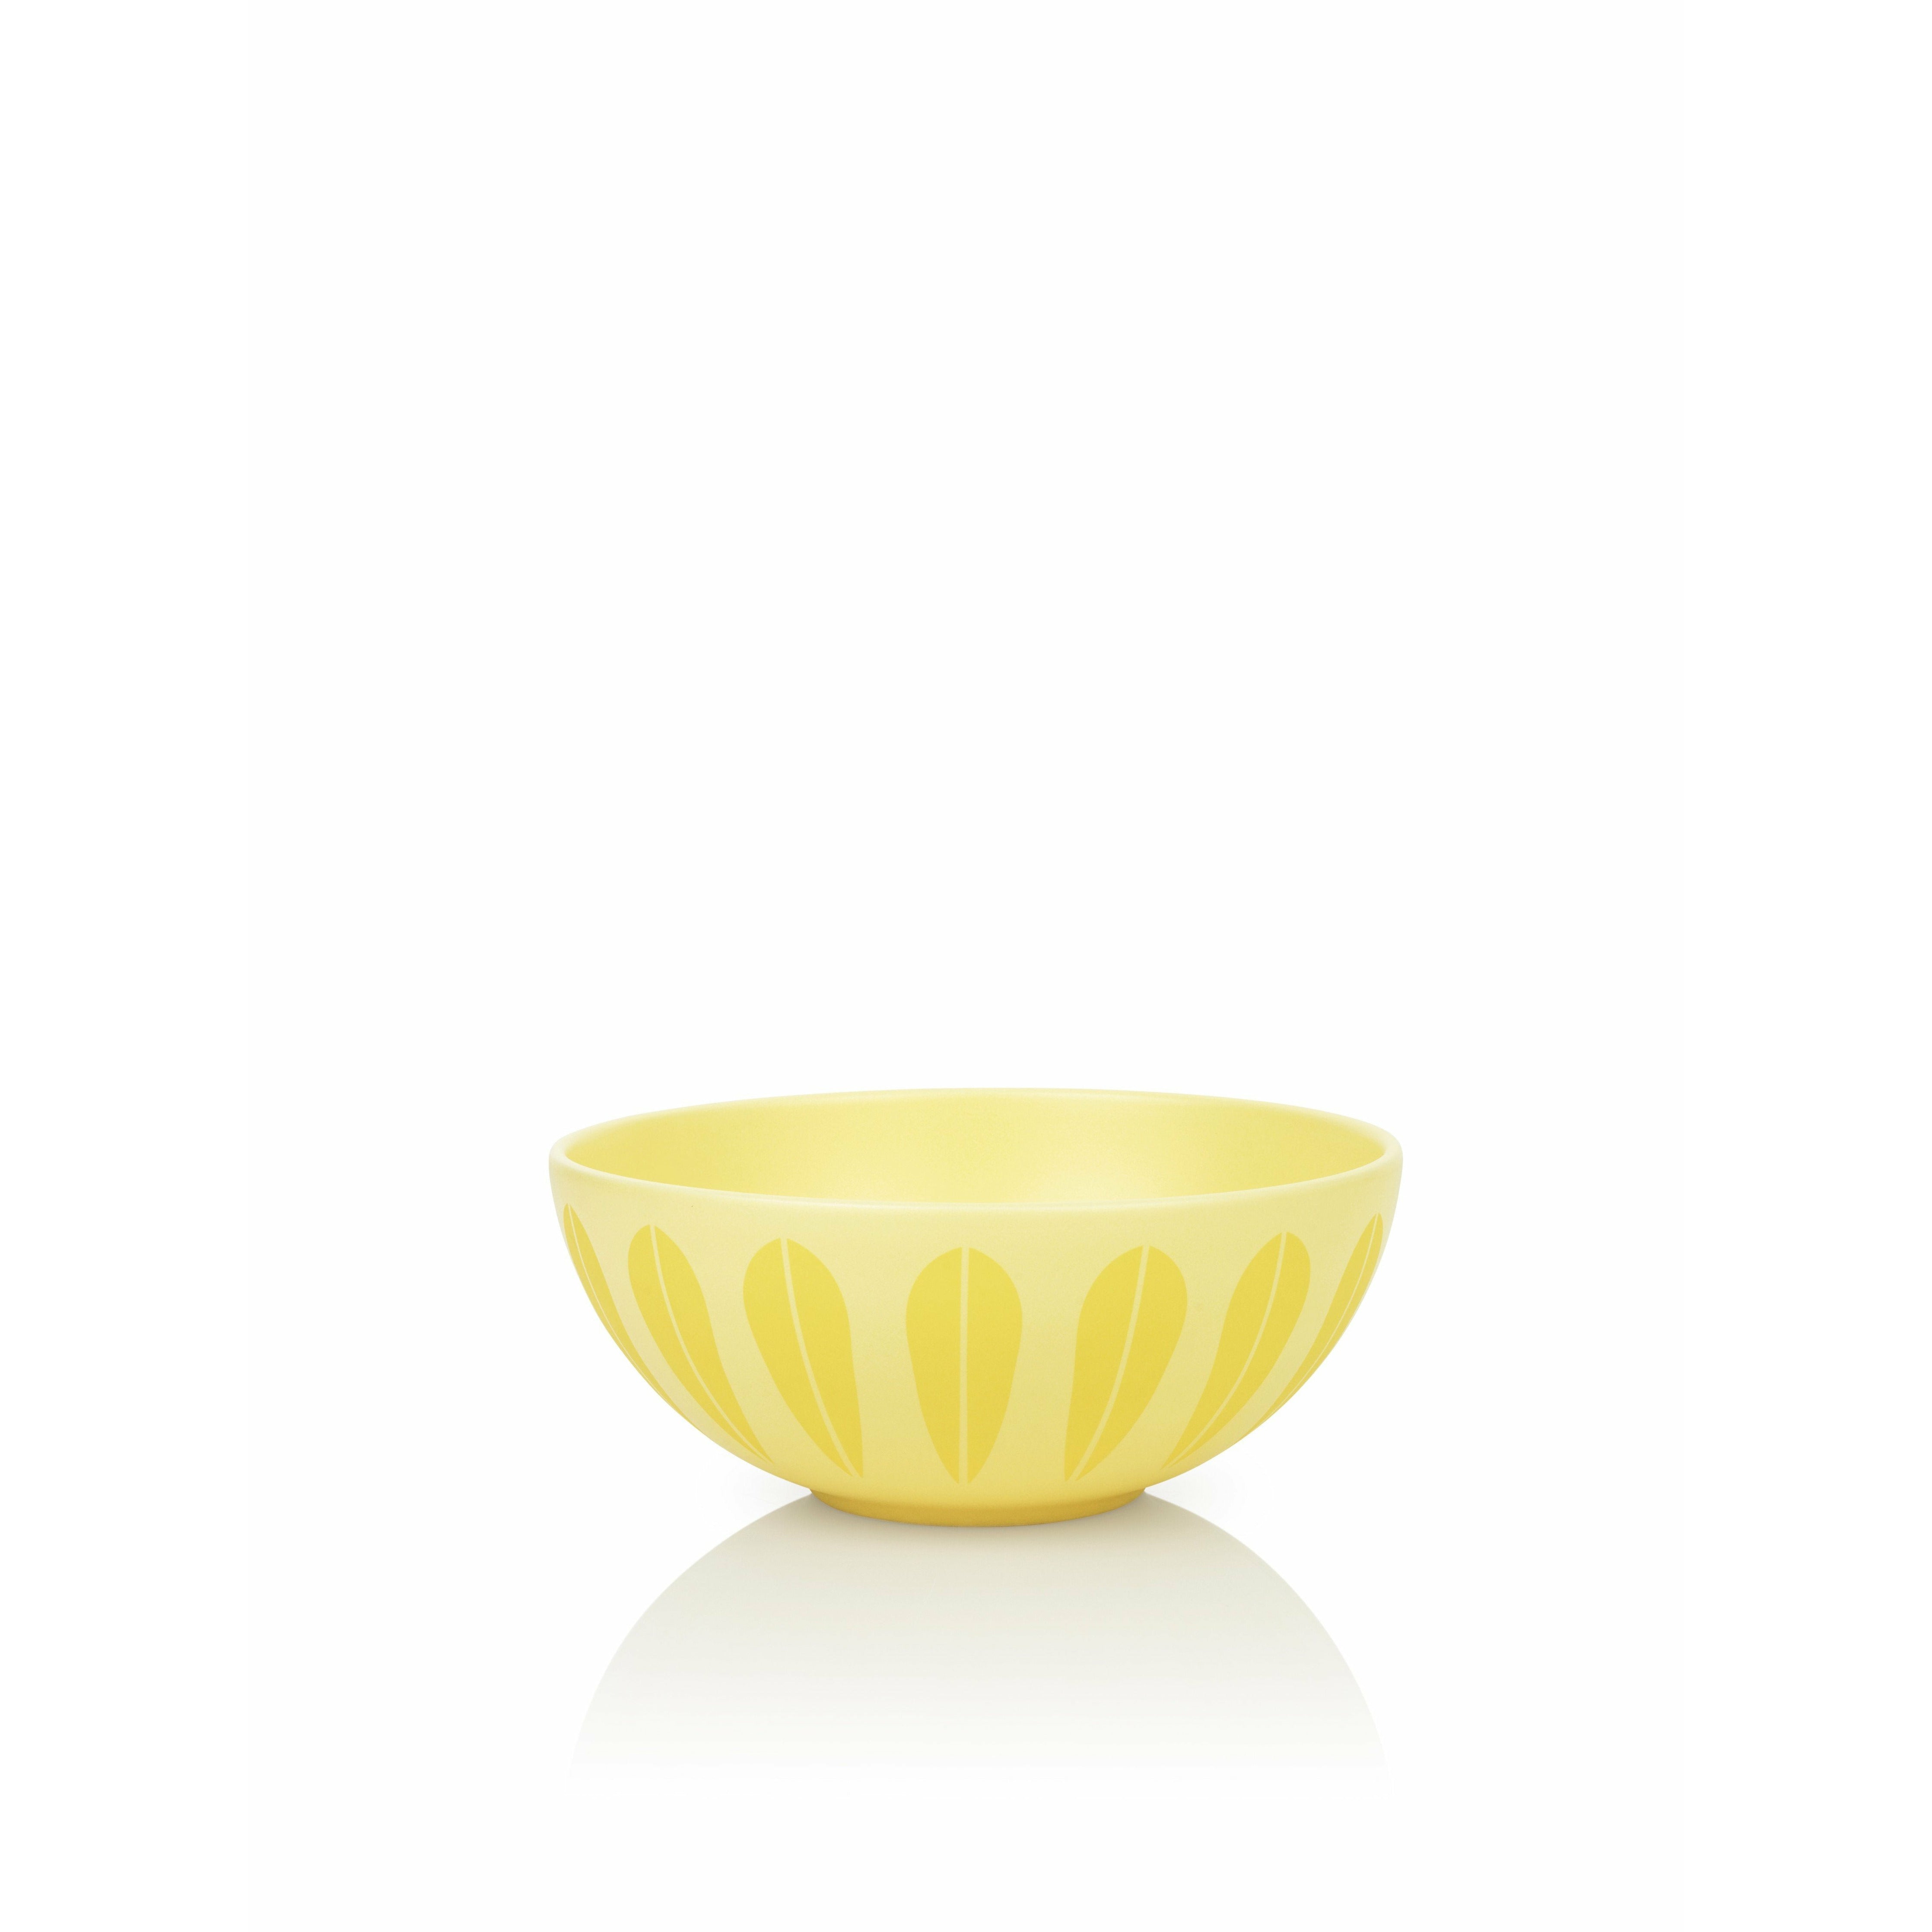 Lucie Kaas Arne Clausen Lotus Bowl jaune, Ø24 cm